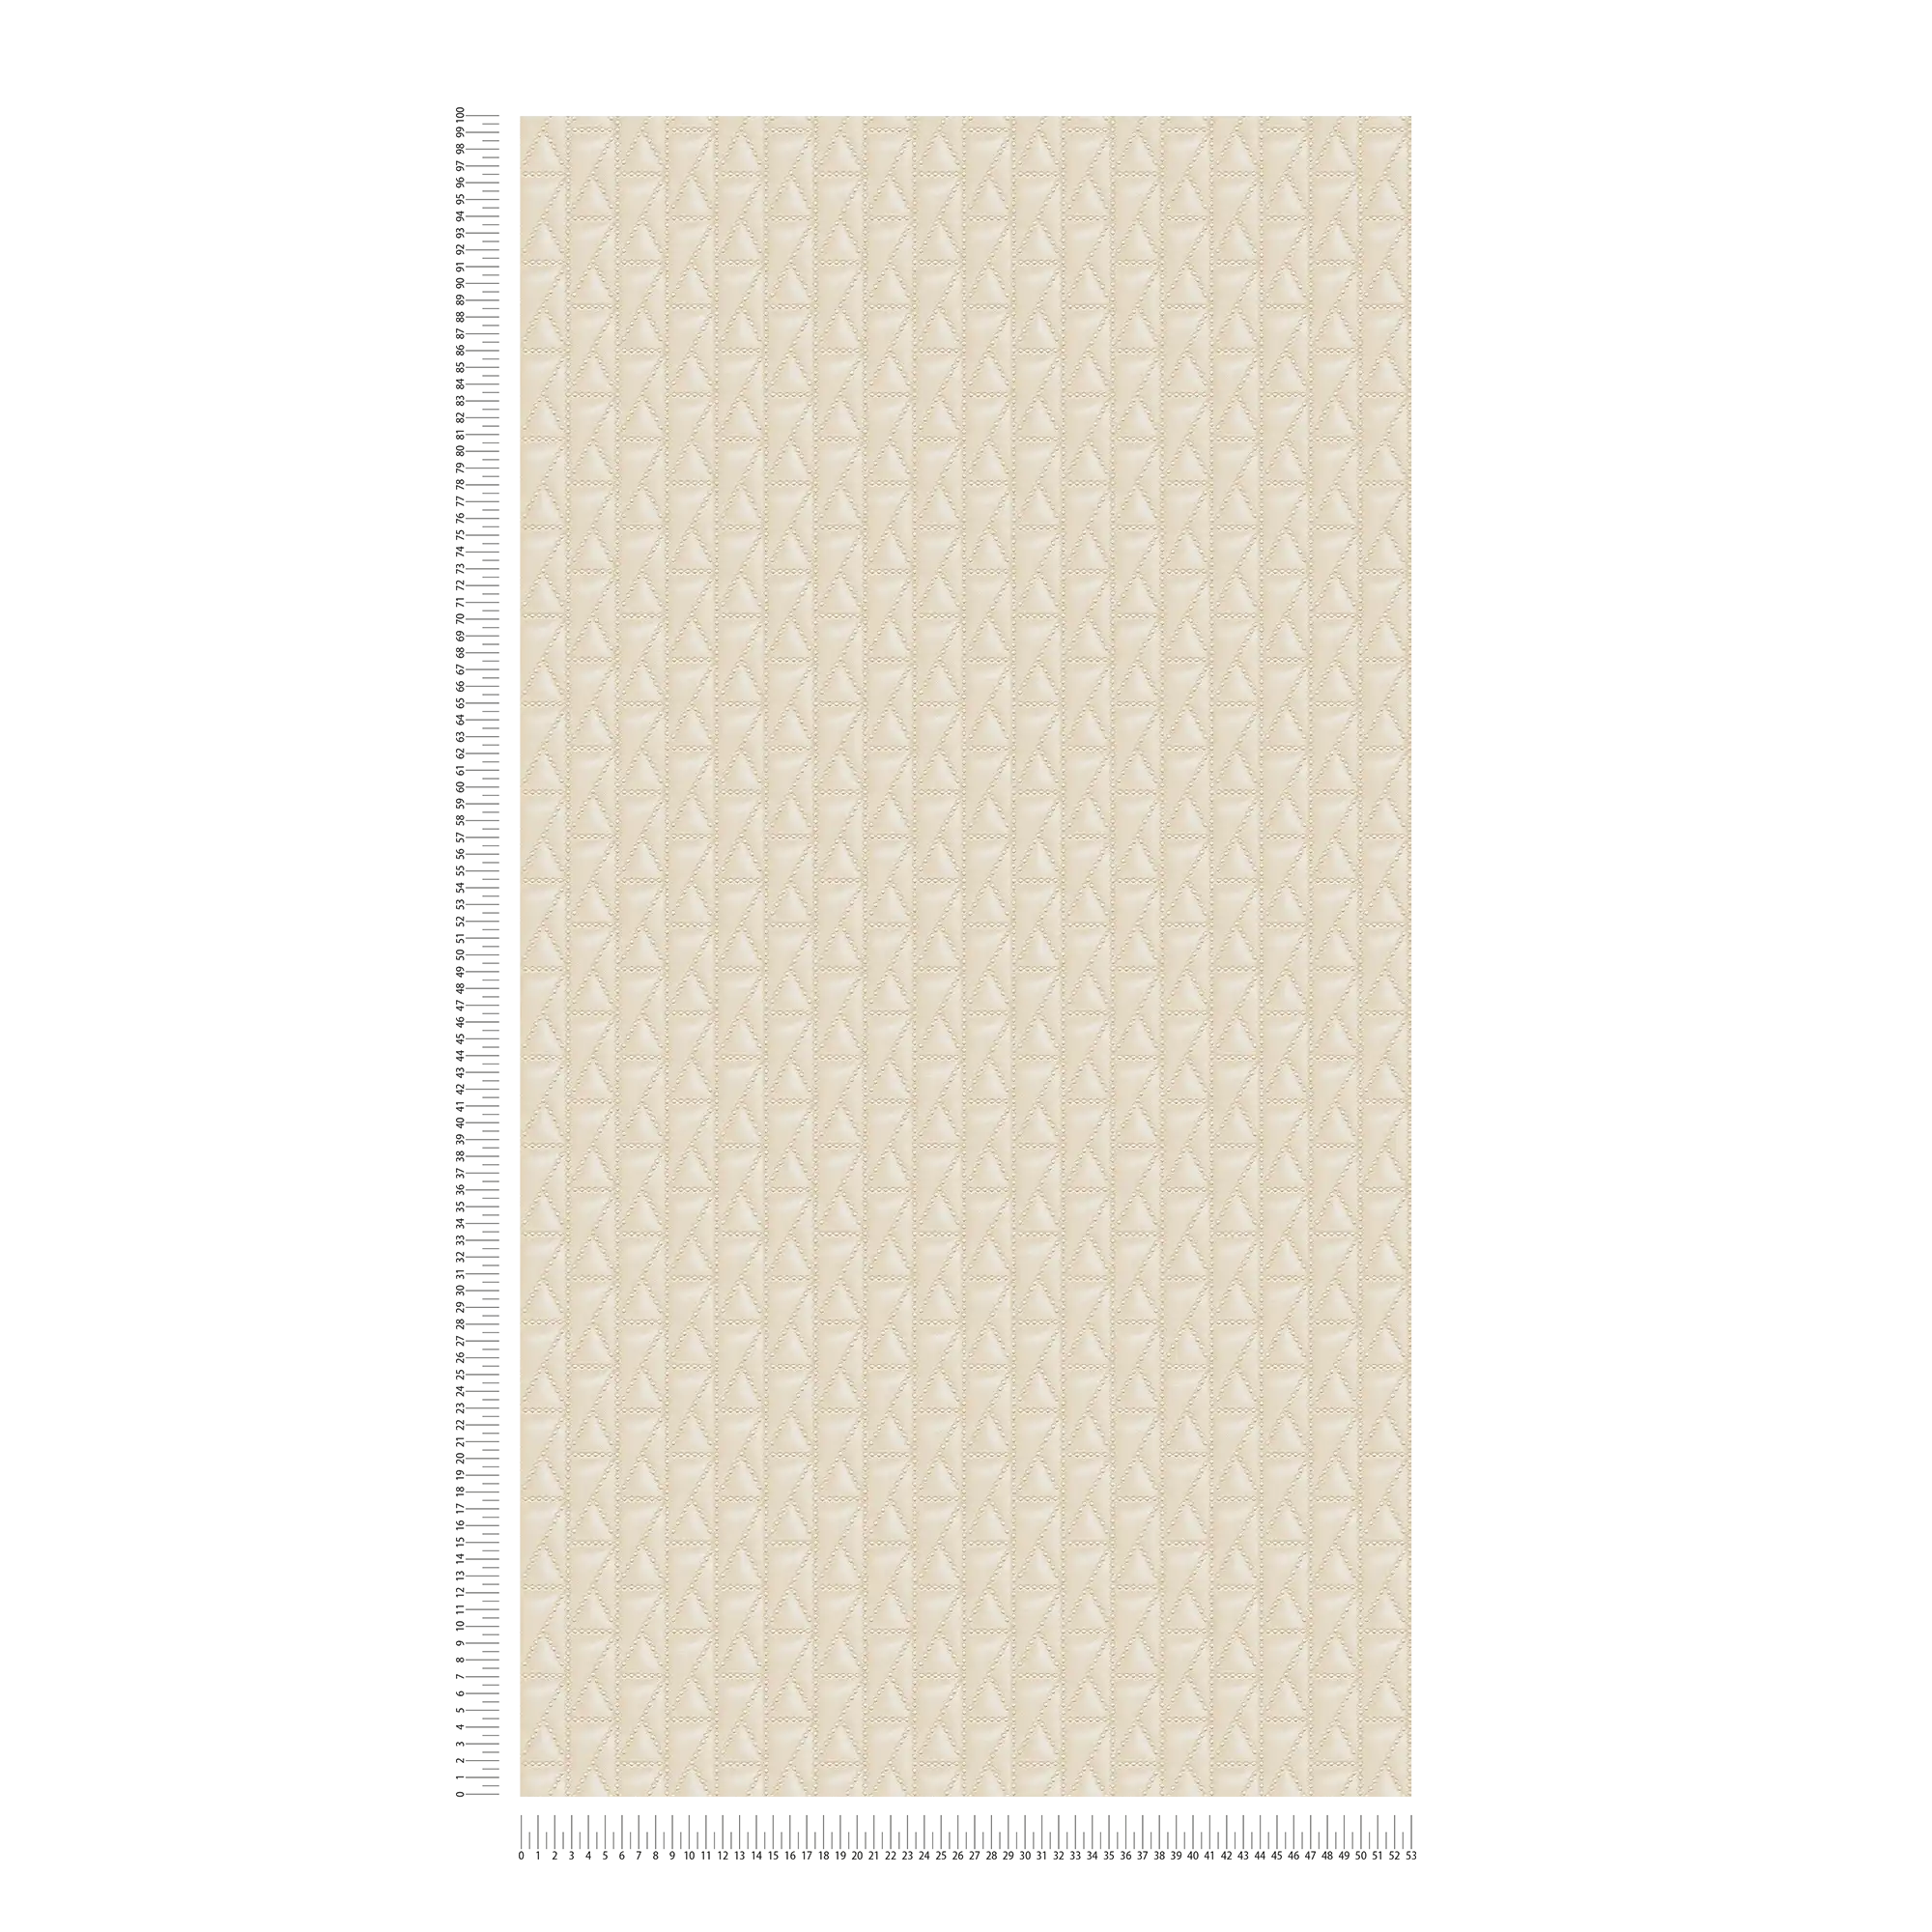             Karl LAGERFELD behangpapier Kuilted Bag Design - Beige, Cream
        